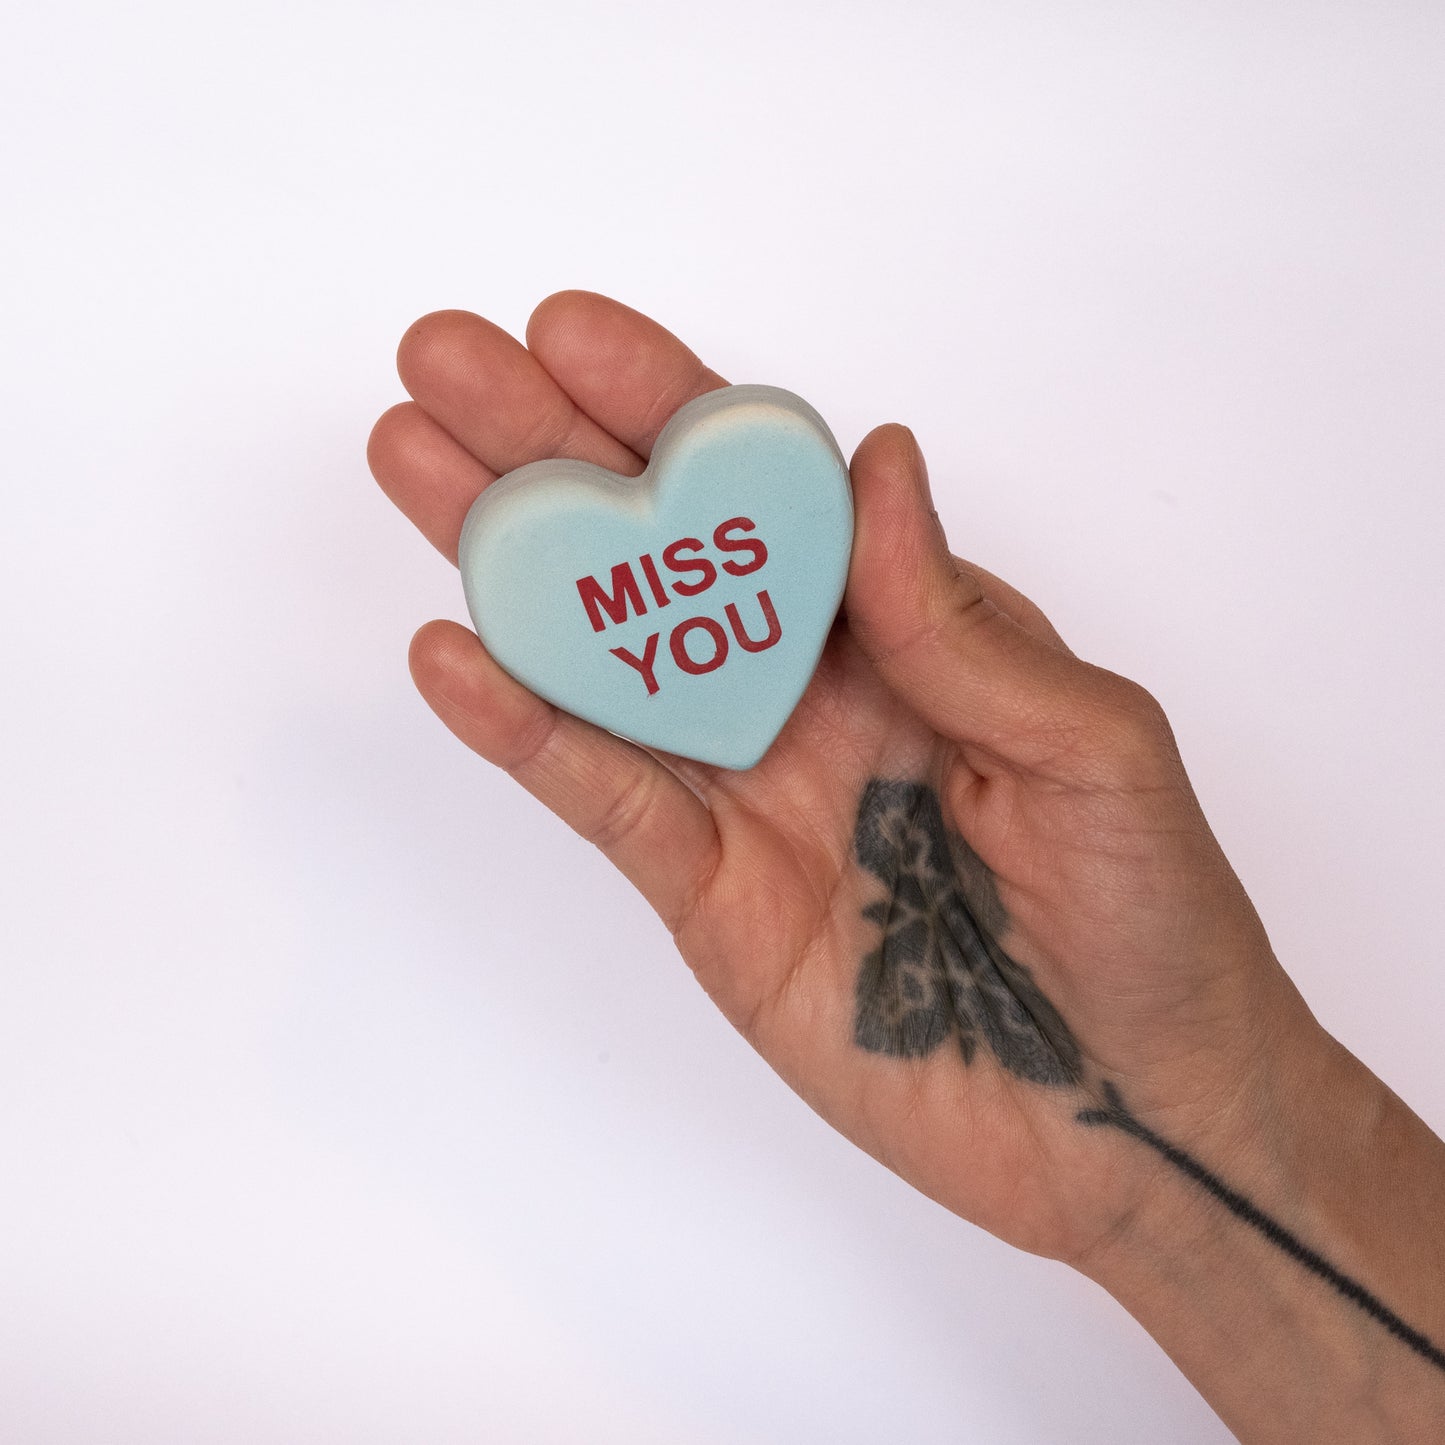  Miss you oversized conversation heart ceramic decoration